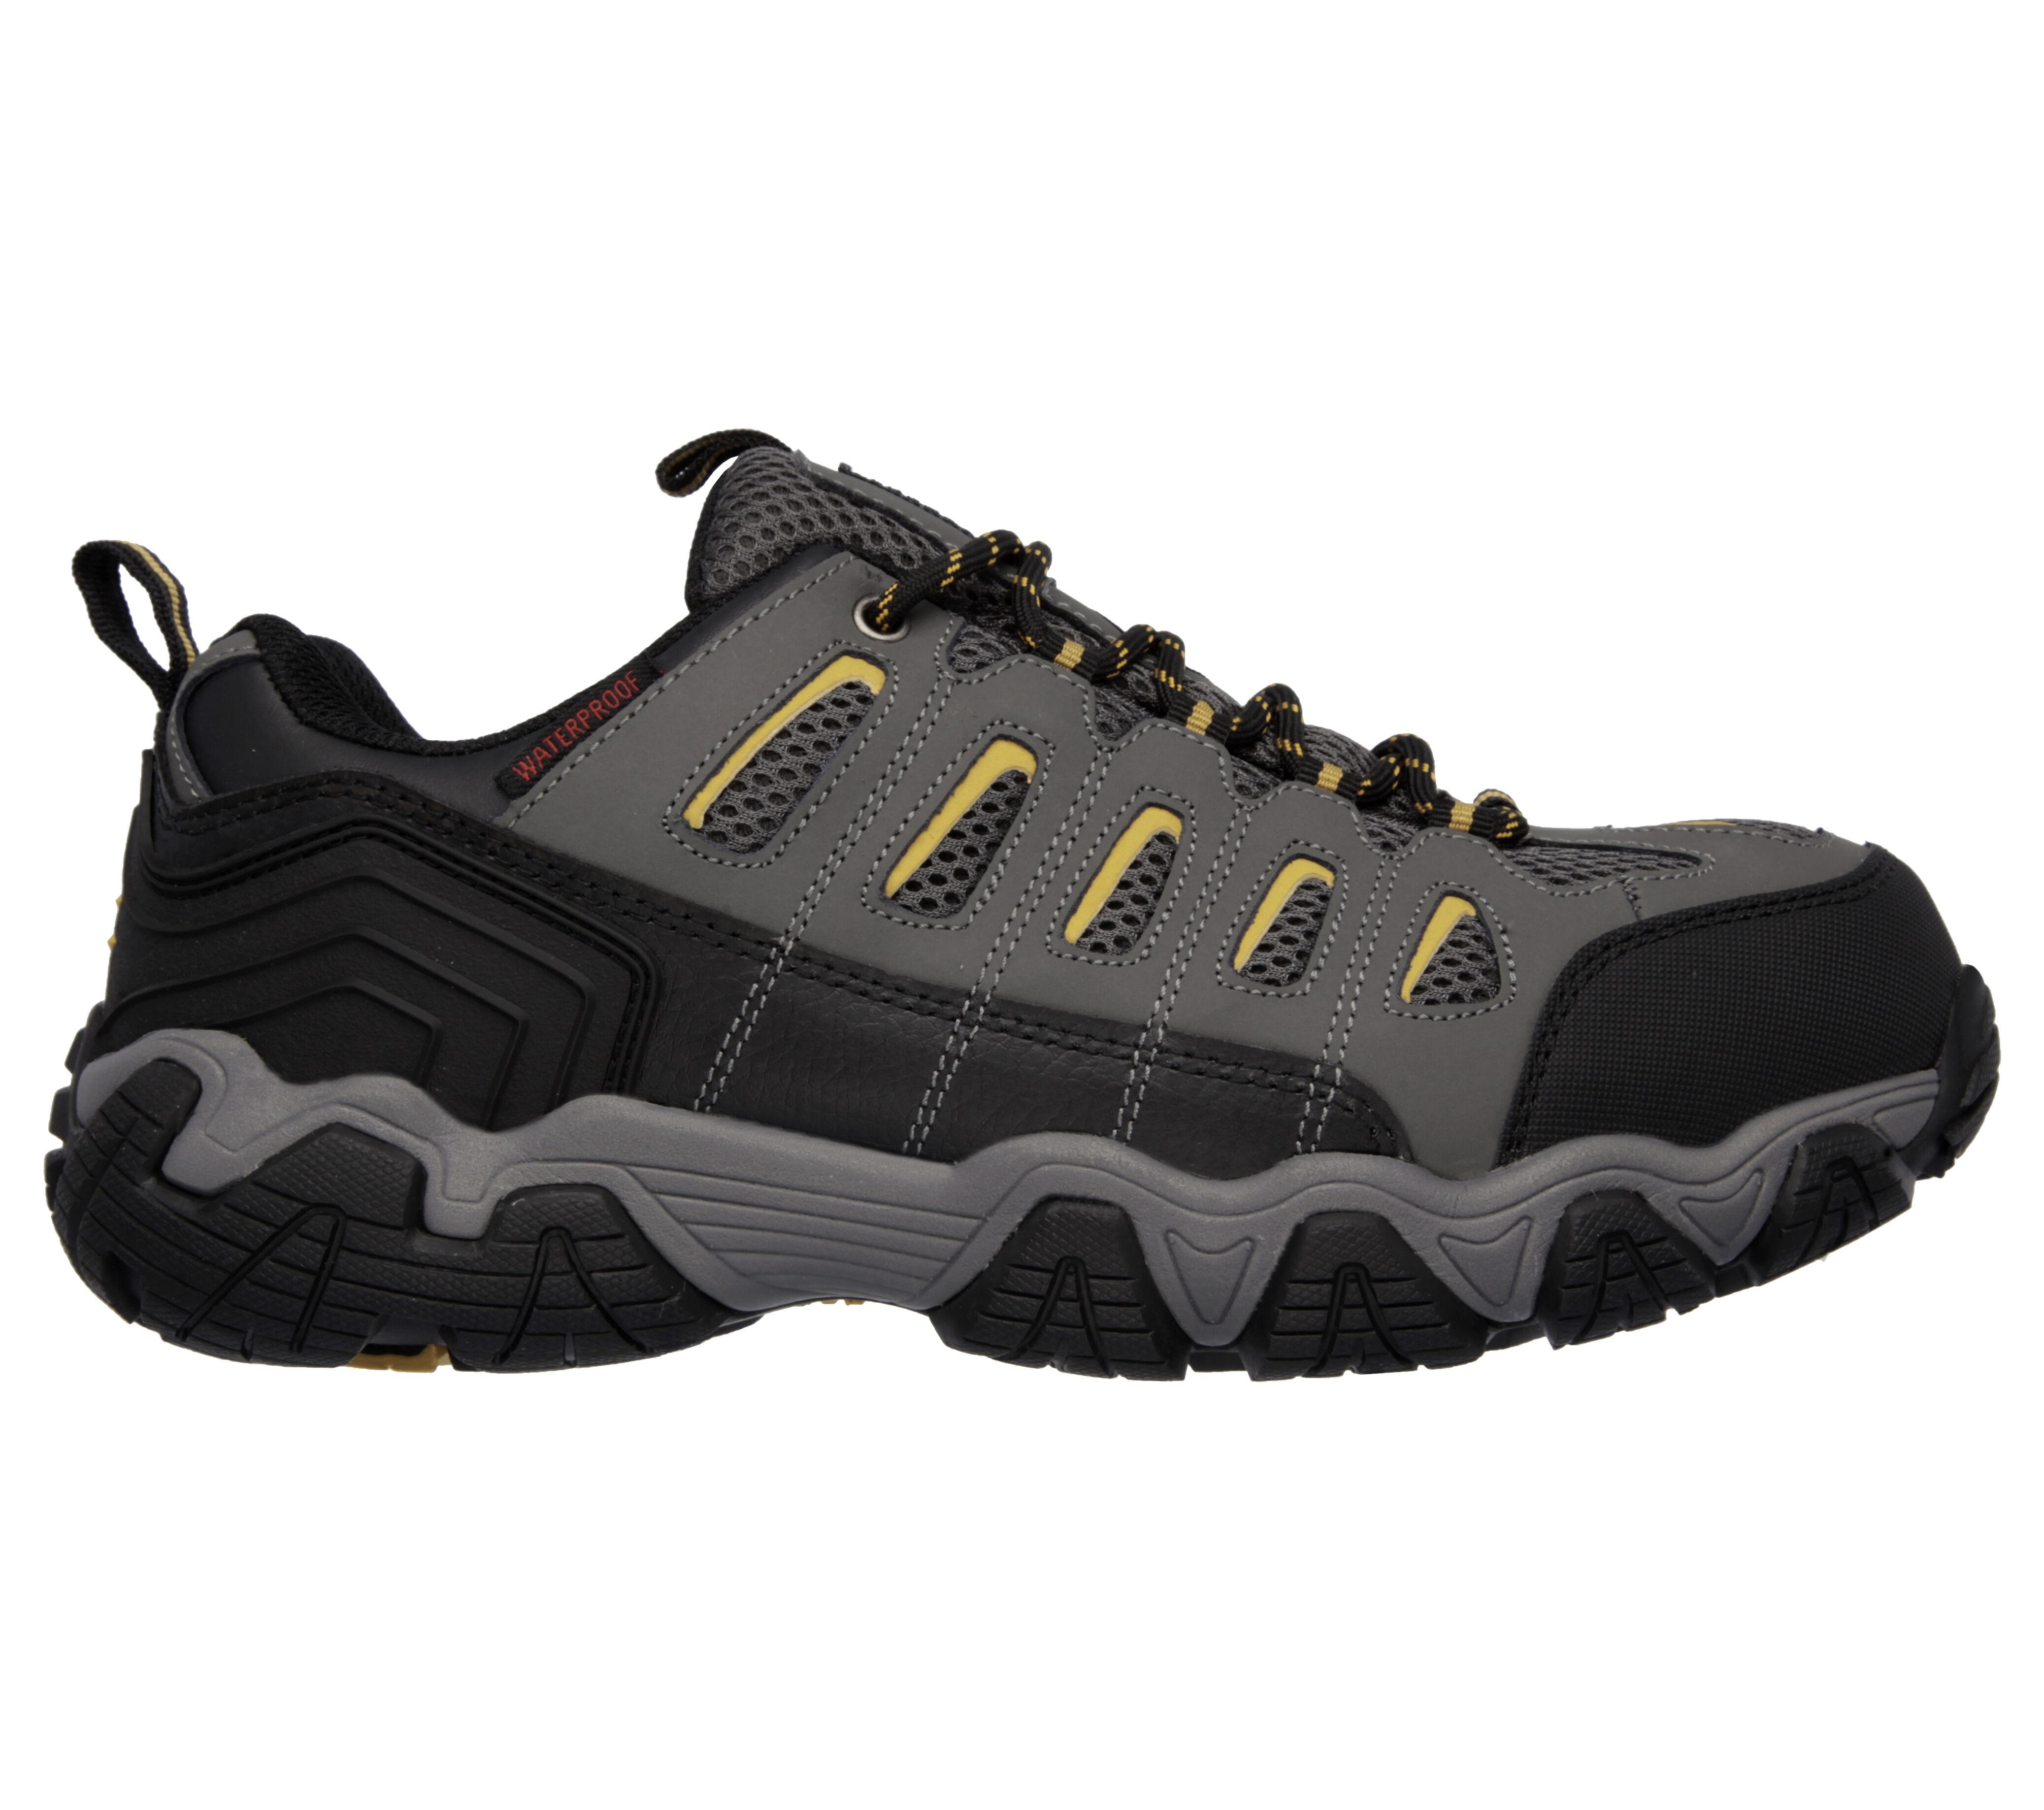 steel toe hiking shoes